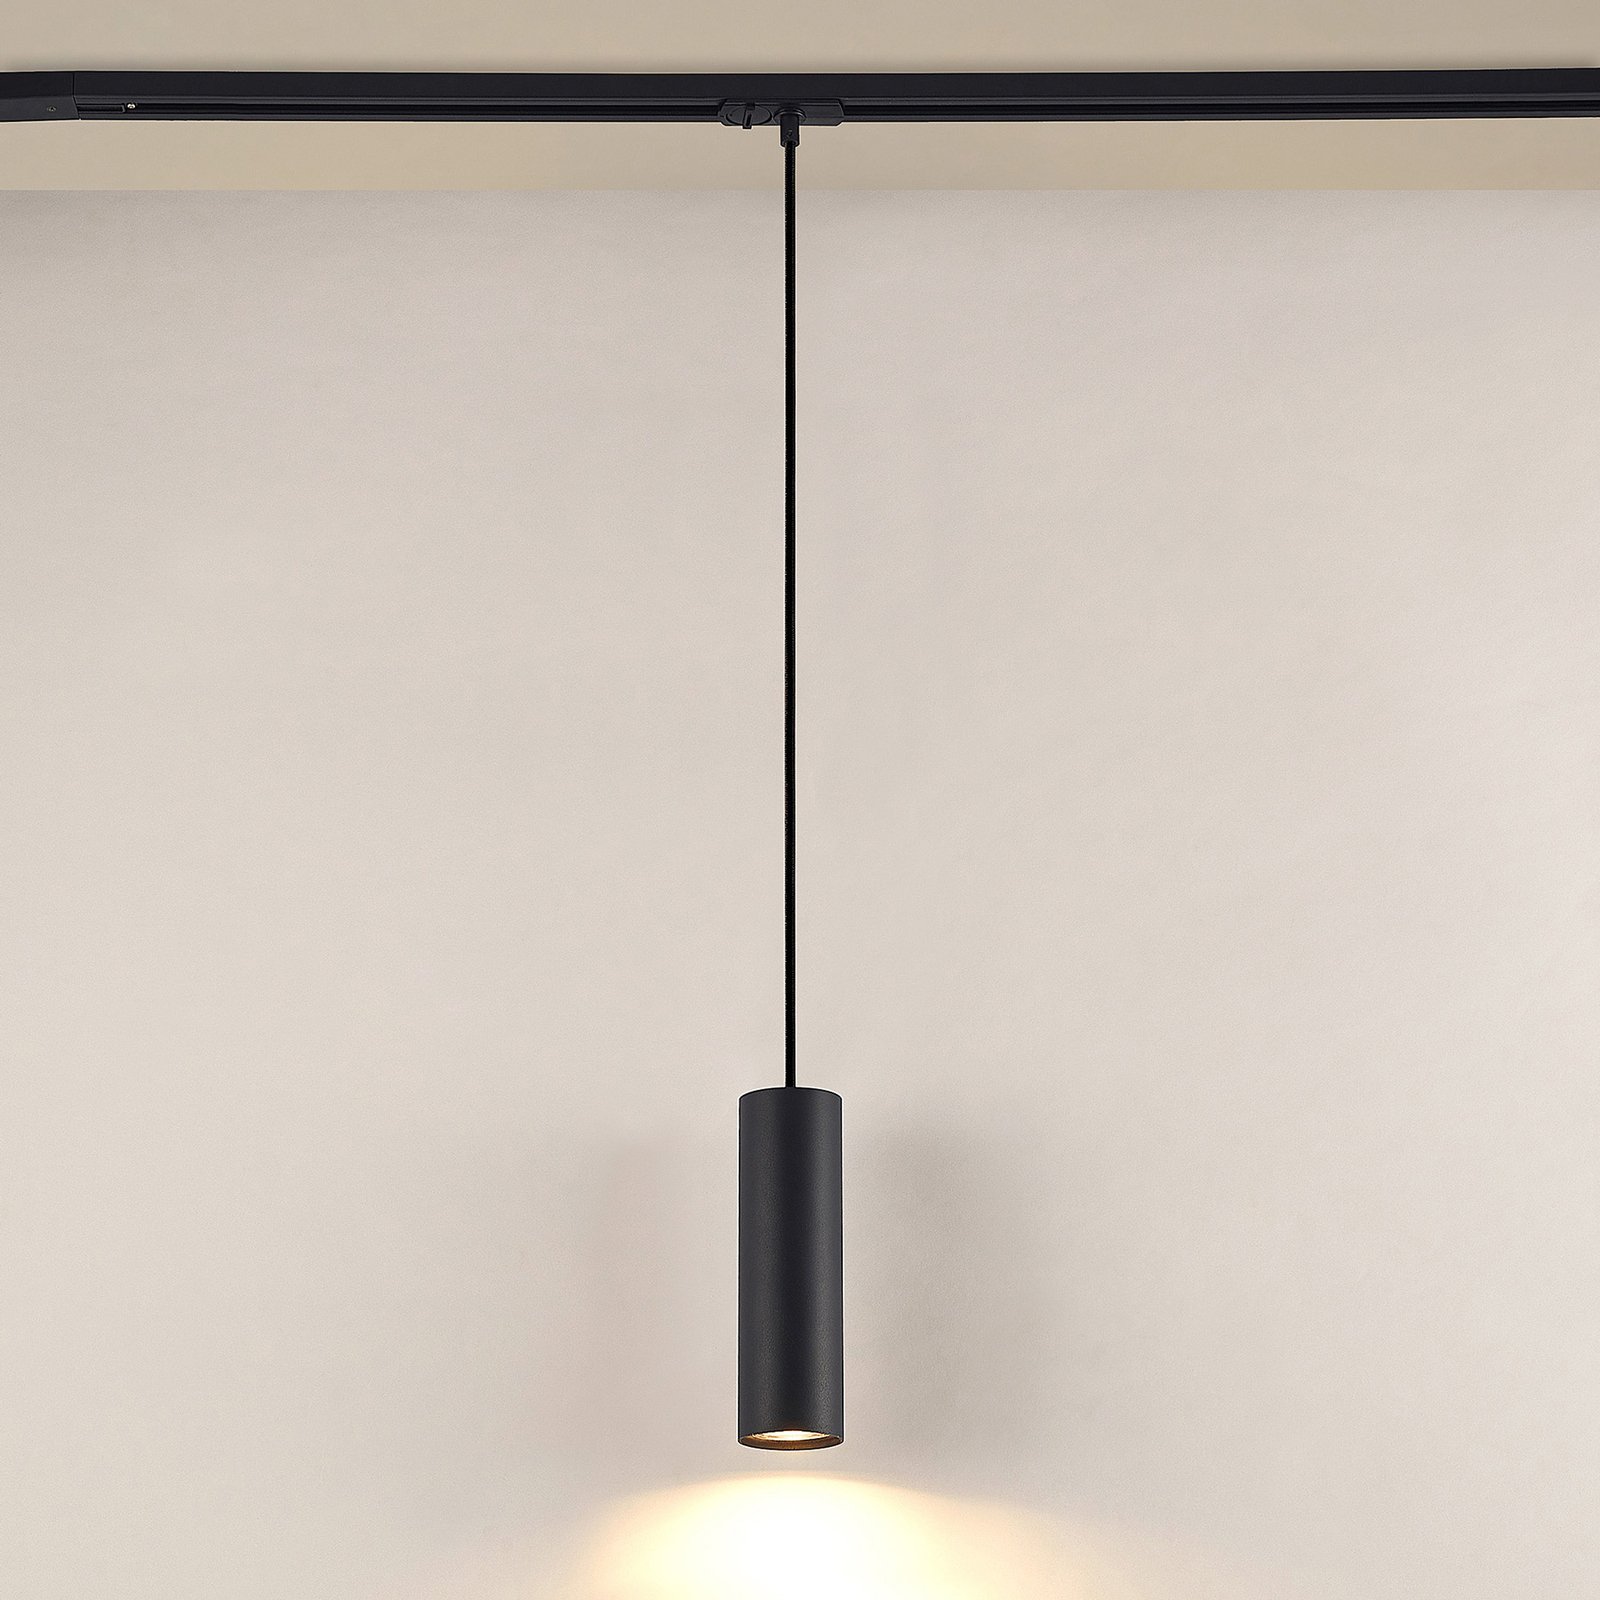 Lindby hanging light Linaro, 20 cm, black, 1-phase, Ø 6 cm